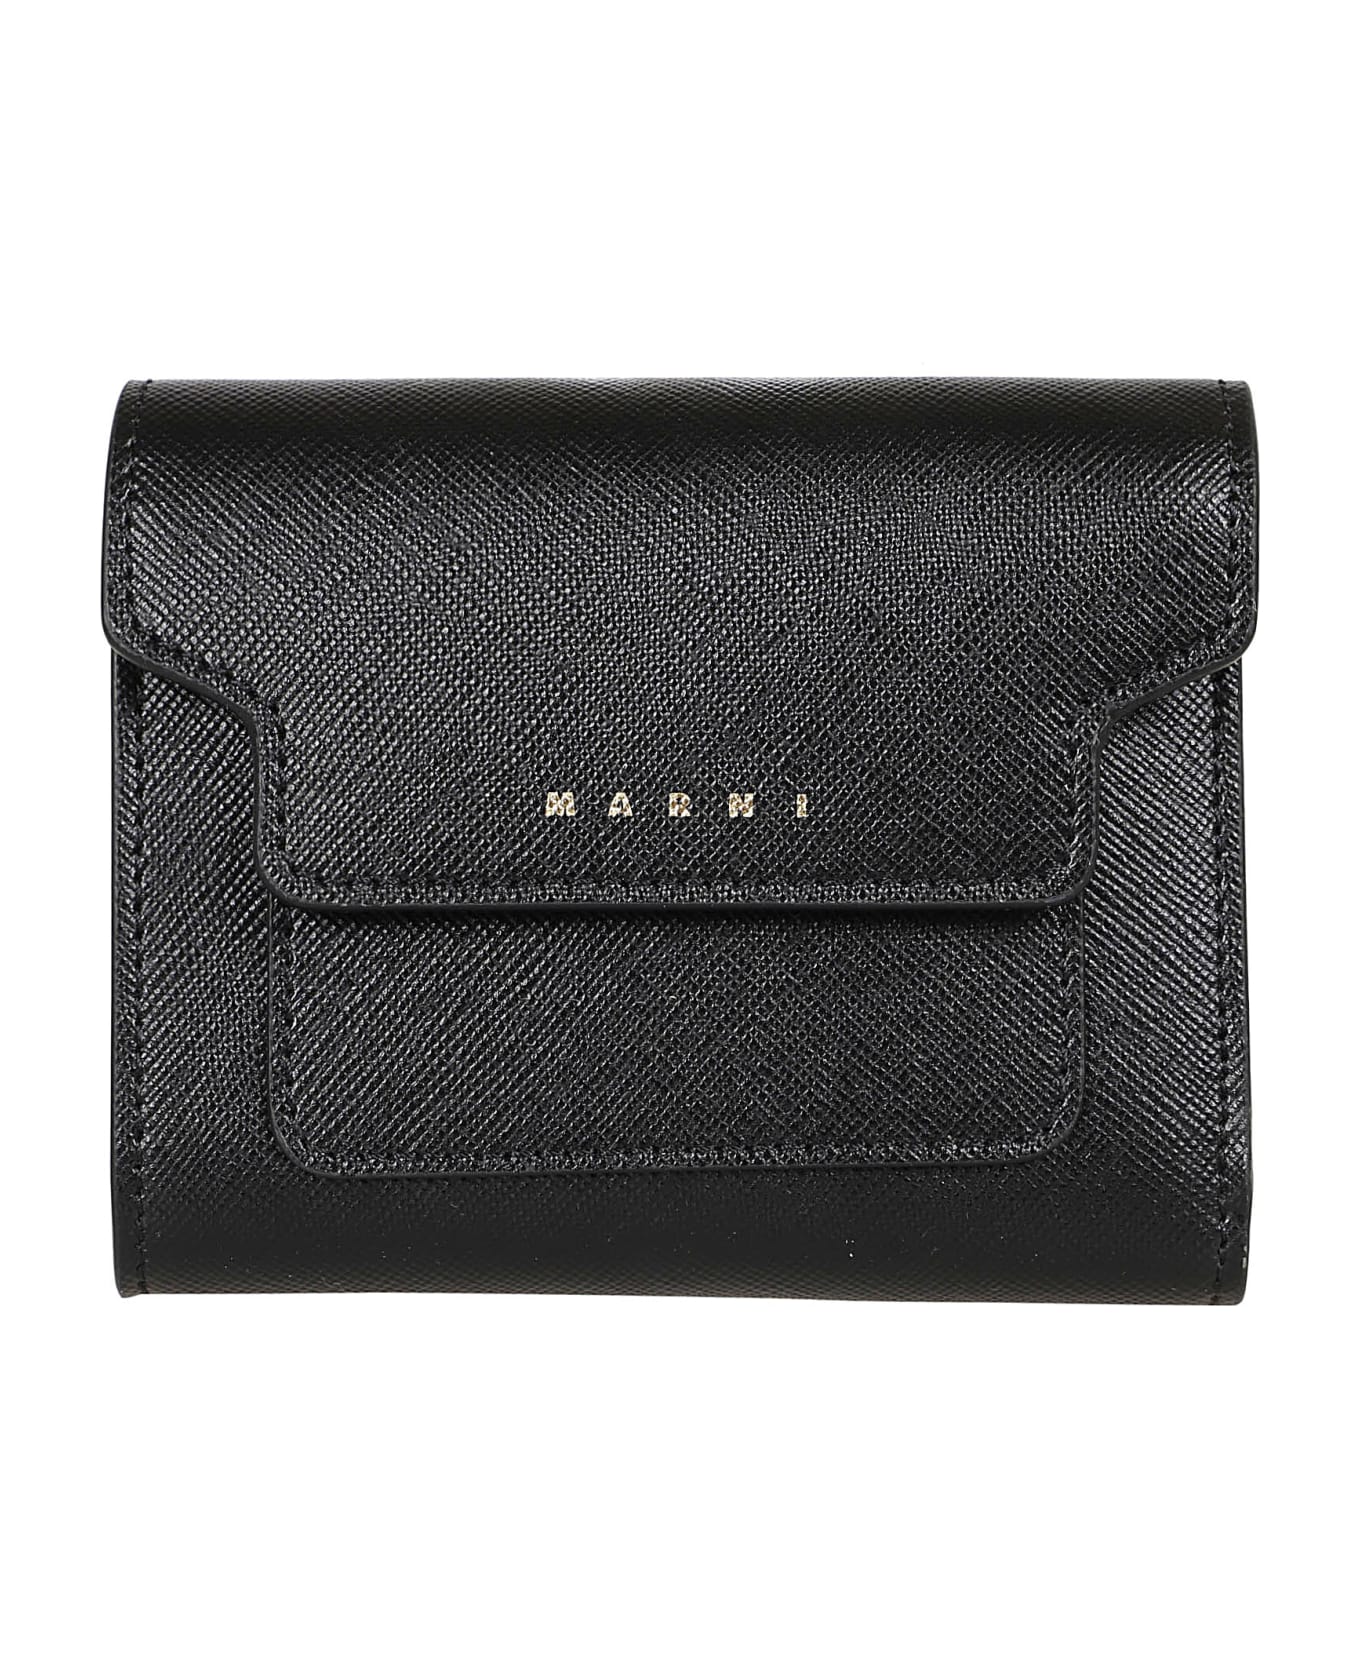 Marni Wallet Flap Squared - N Black